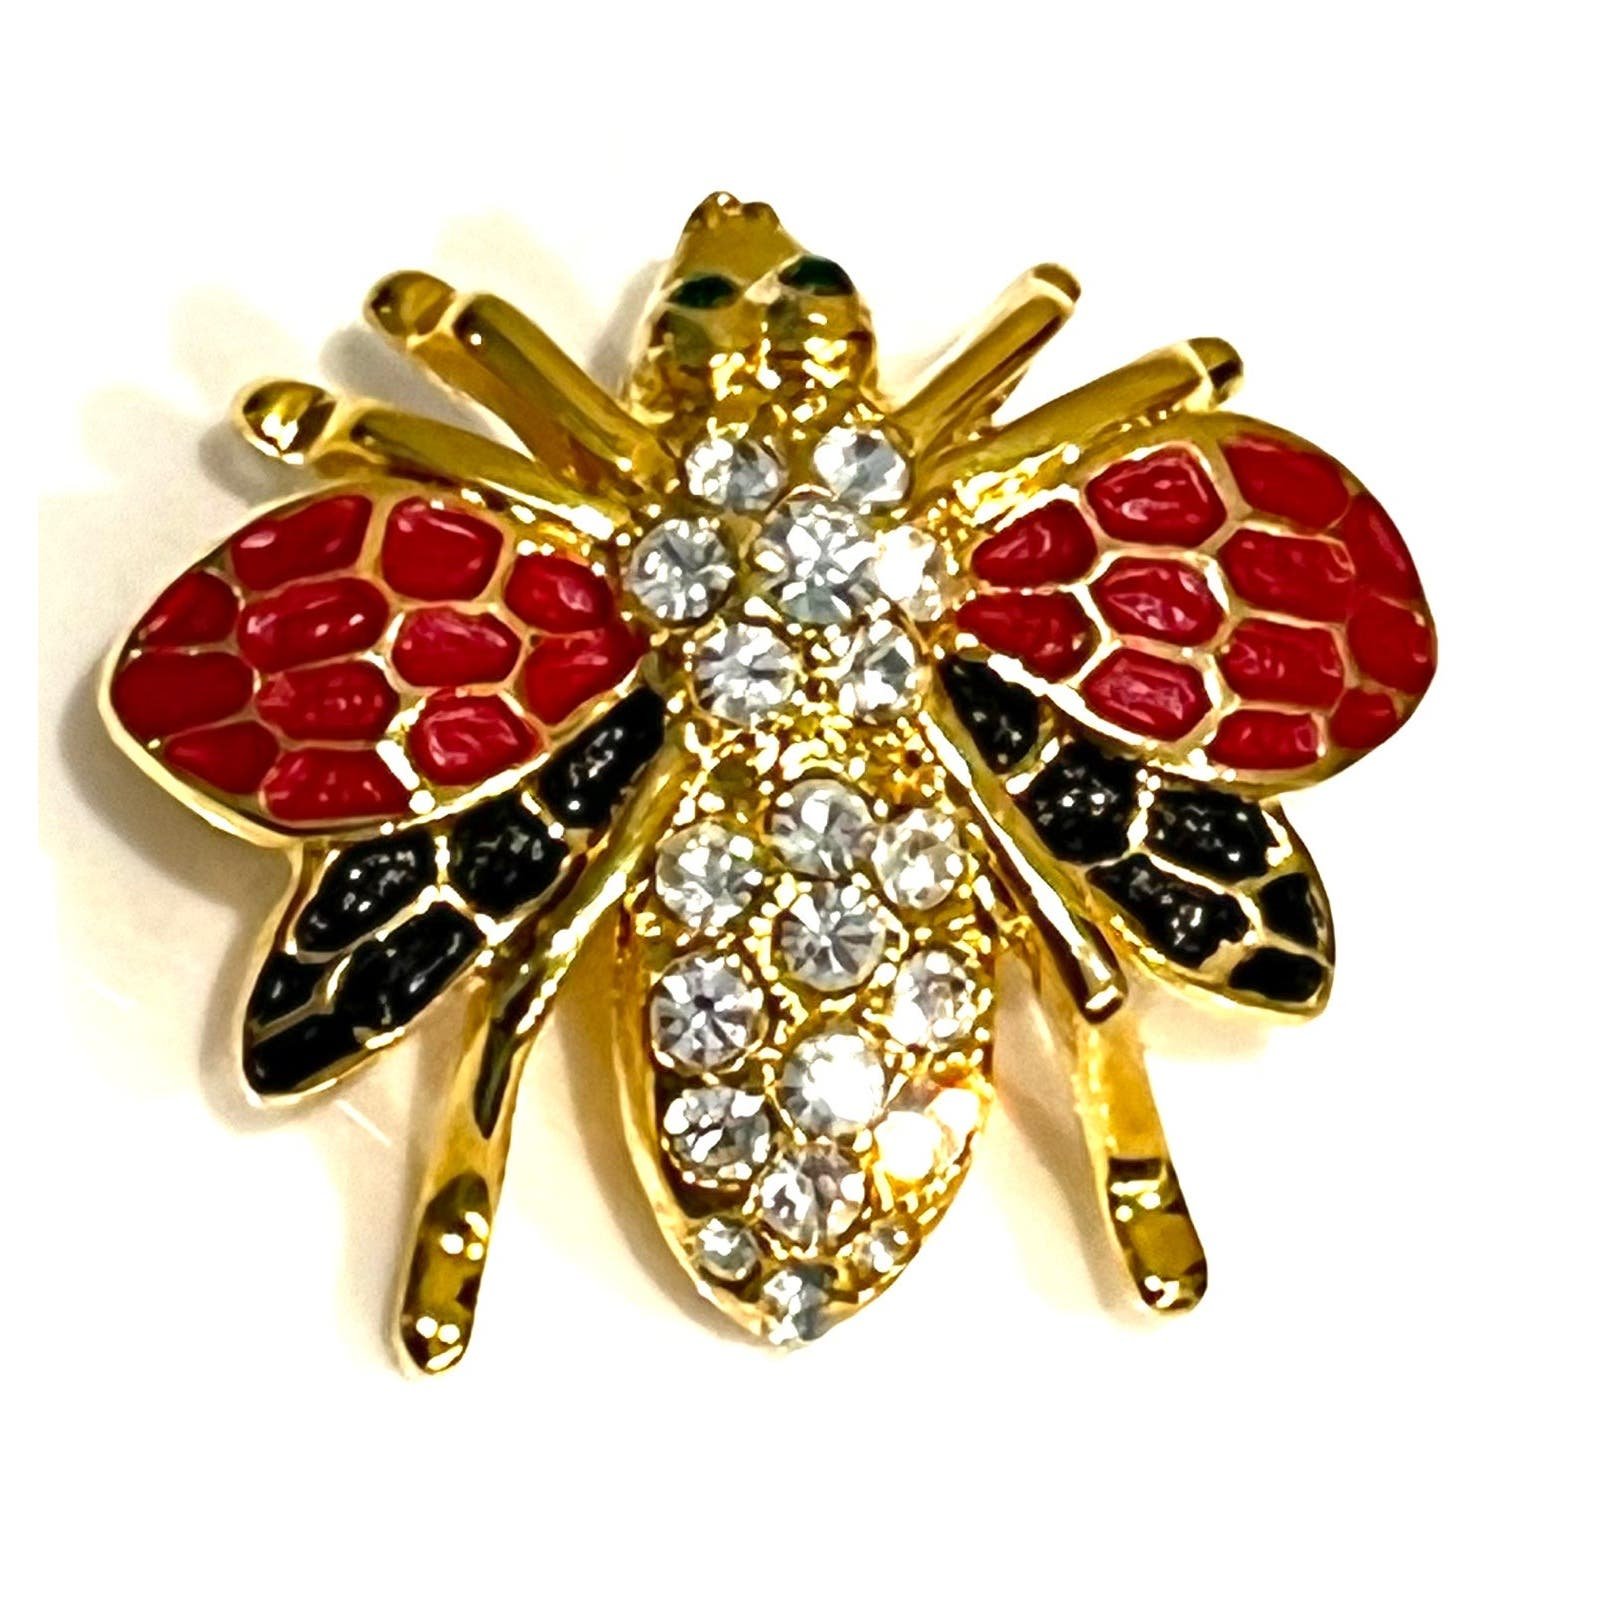 VTG BEE BROOCH Pin 1-1/2” Double Wing Crystal Rhinestone Enameled Gold Red Black 1faWBakp2